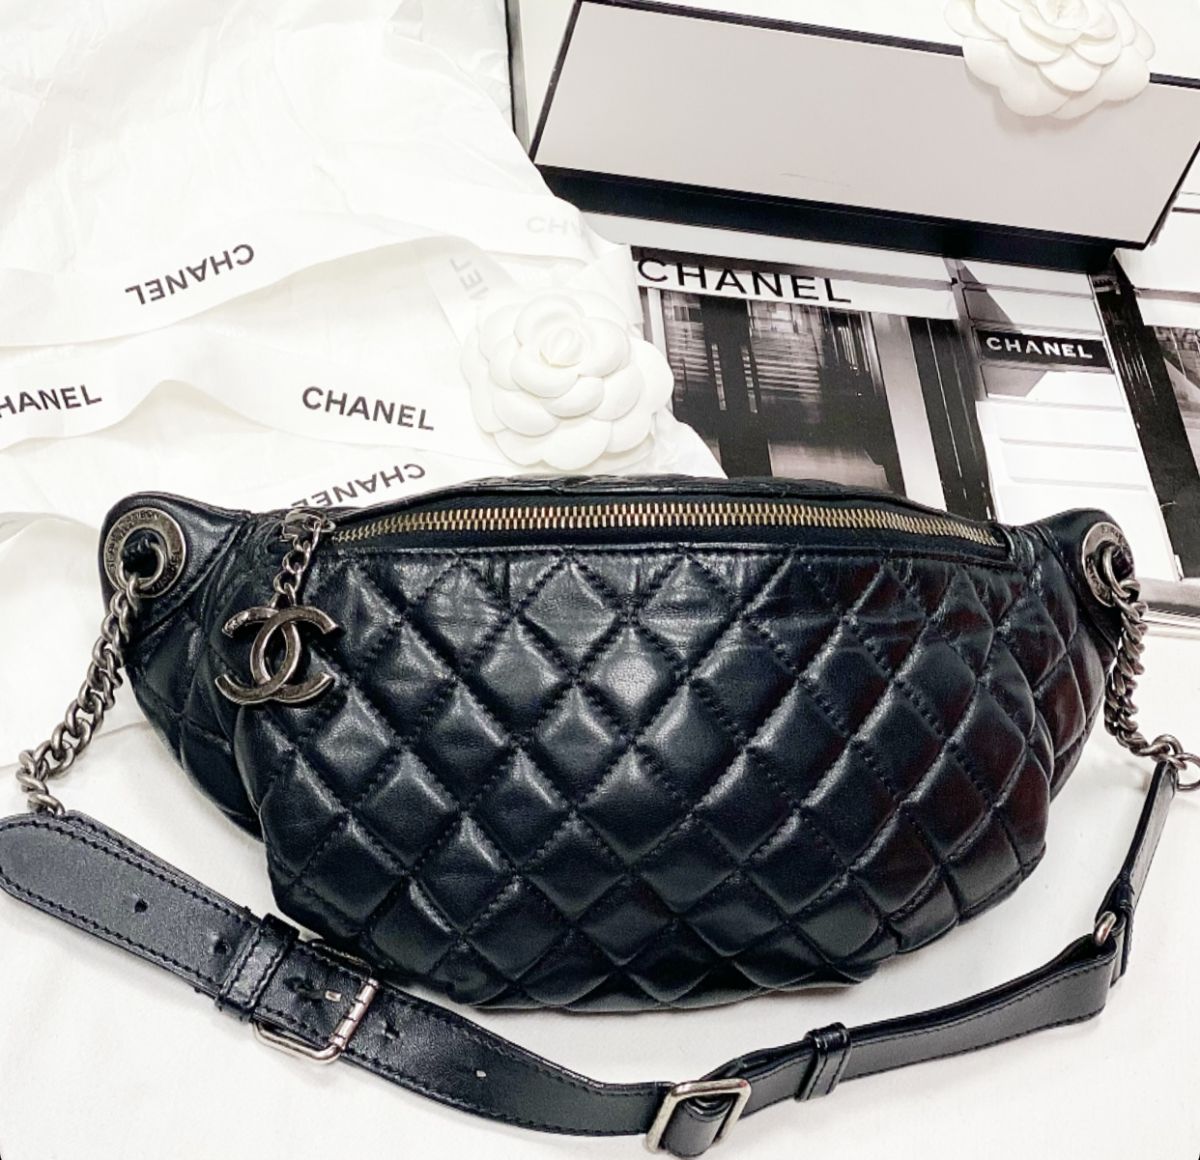 Сумка на пояс Chanel размер 25/15 цена 169 232 руб 